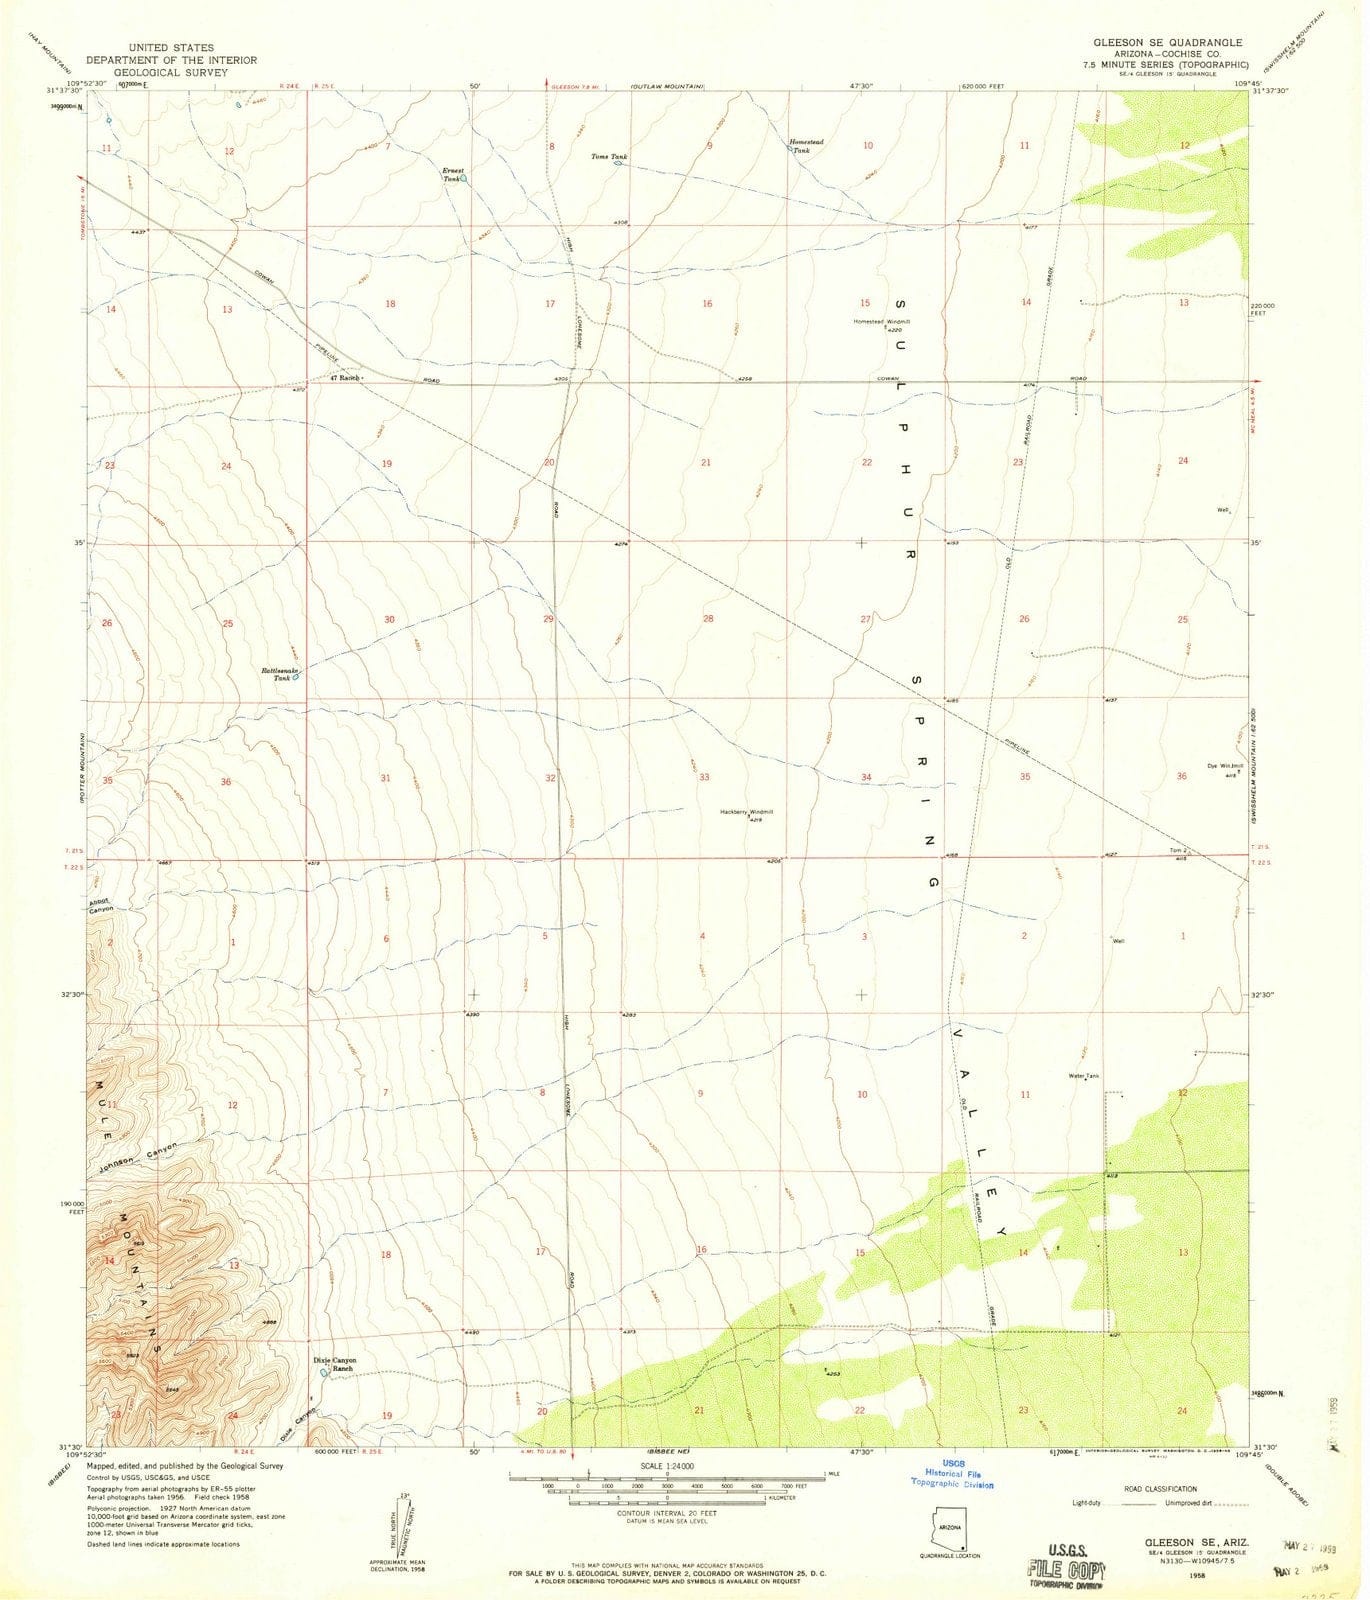 1958 Gleeson, AZ - Arizona - USGS Topographic Map v2